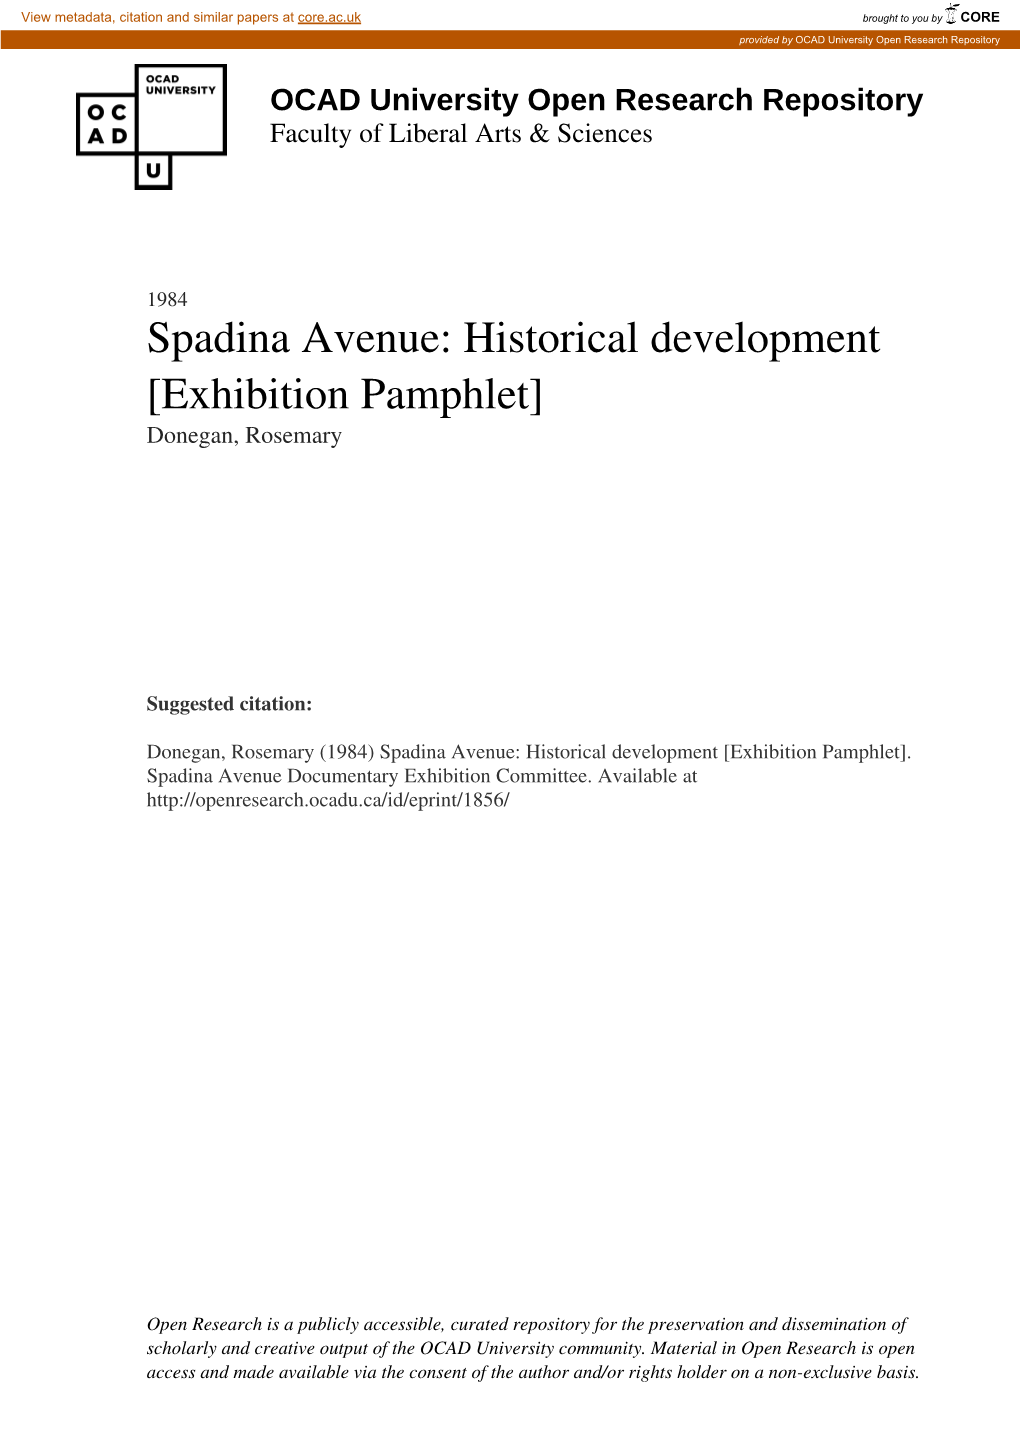 Spadina Avenue: Historical Development [Exhibition Pamphlet] Donegan, Rosemary